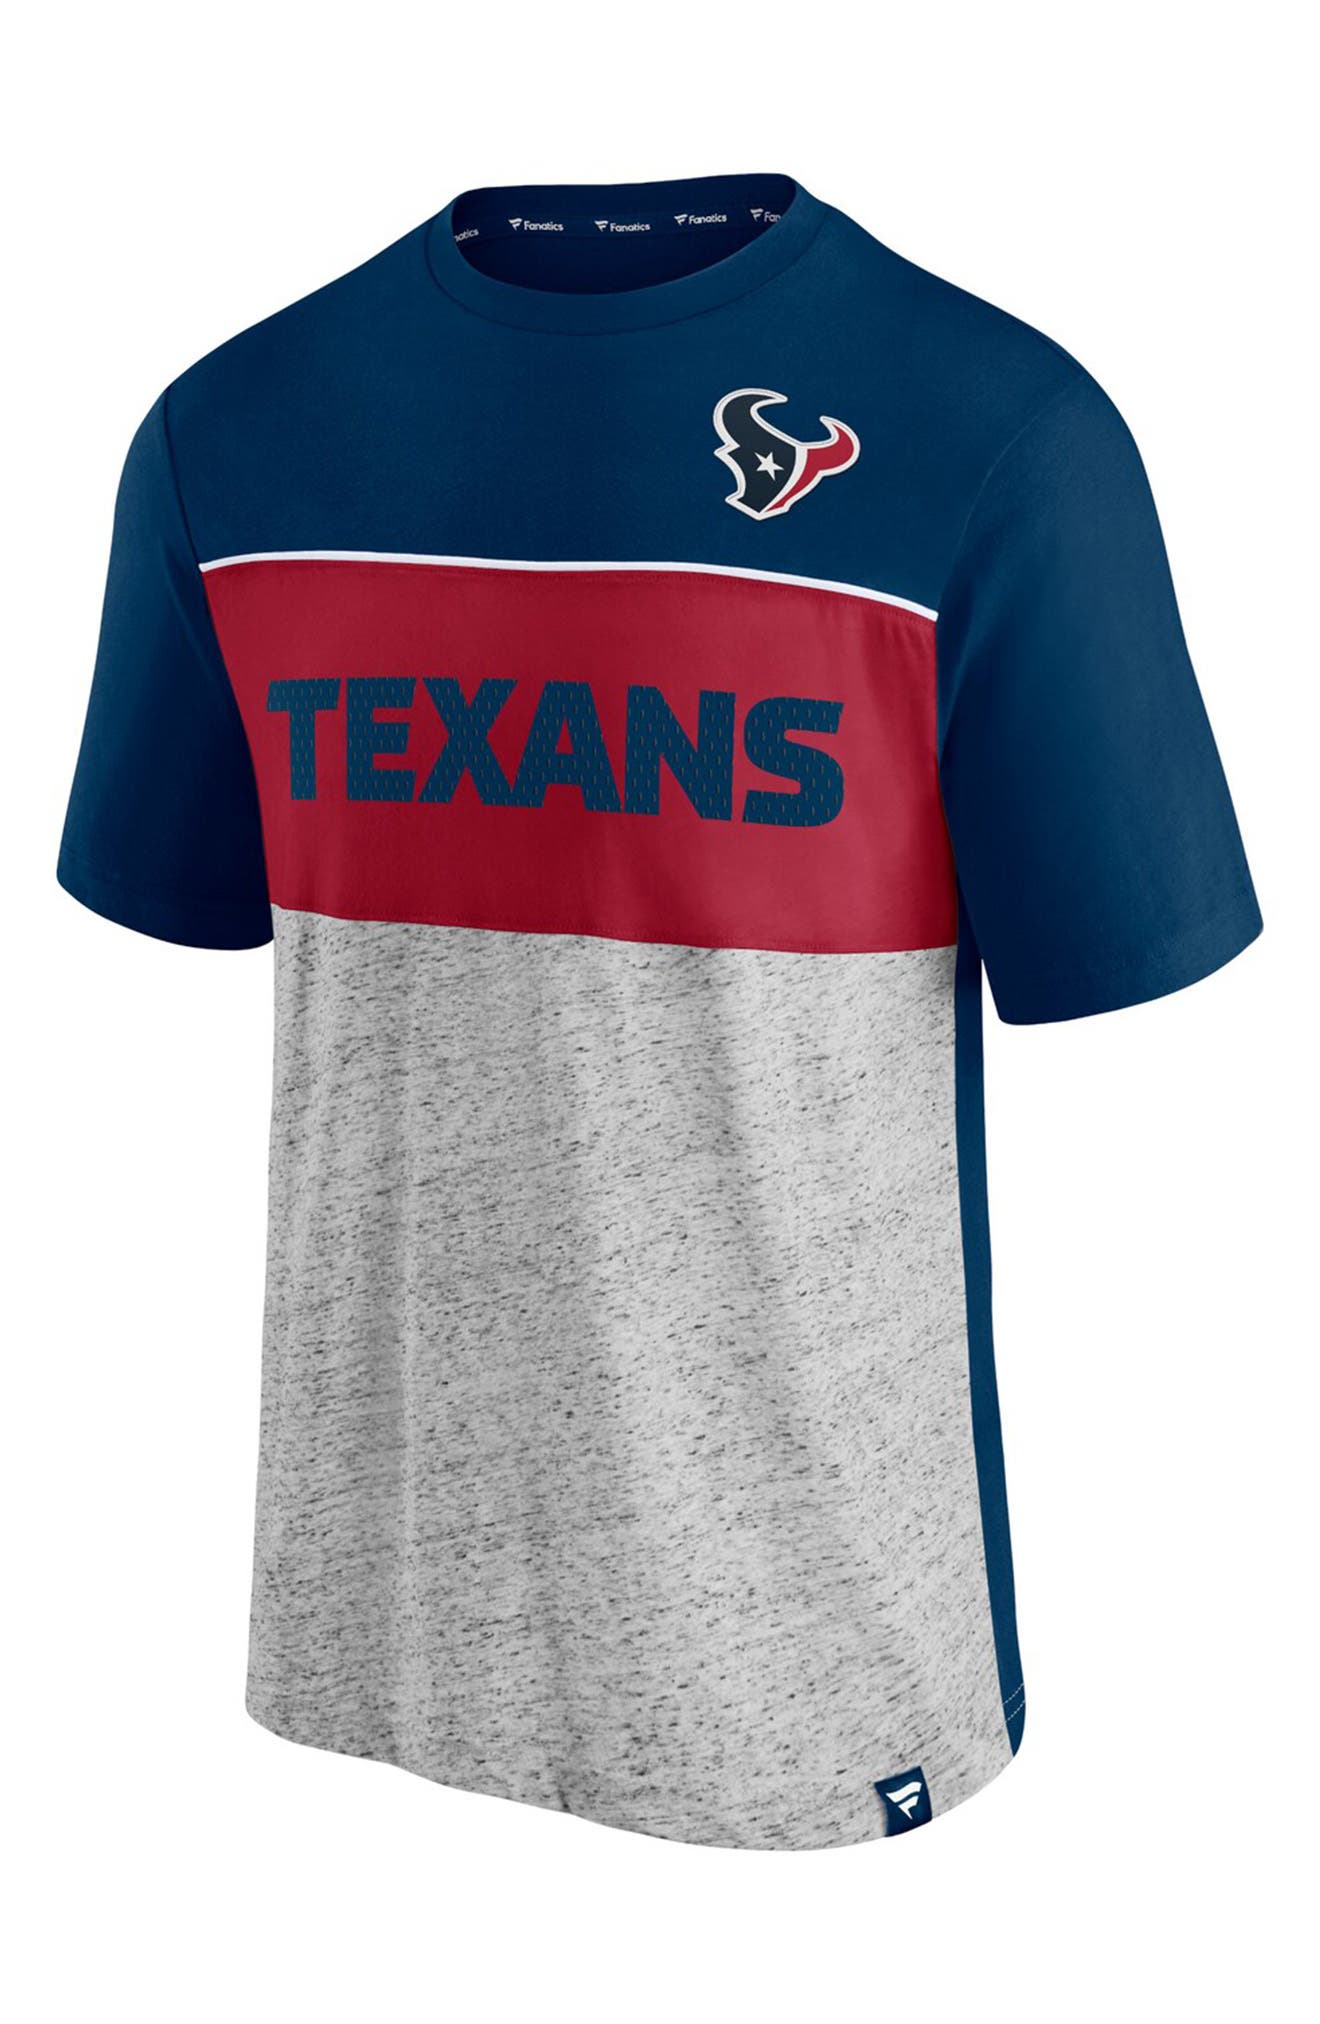 Houston Texans man T shirt